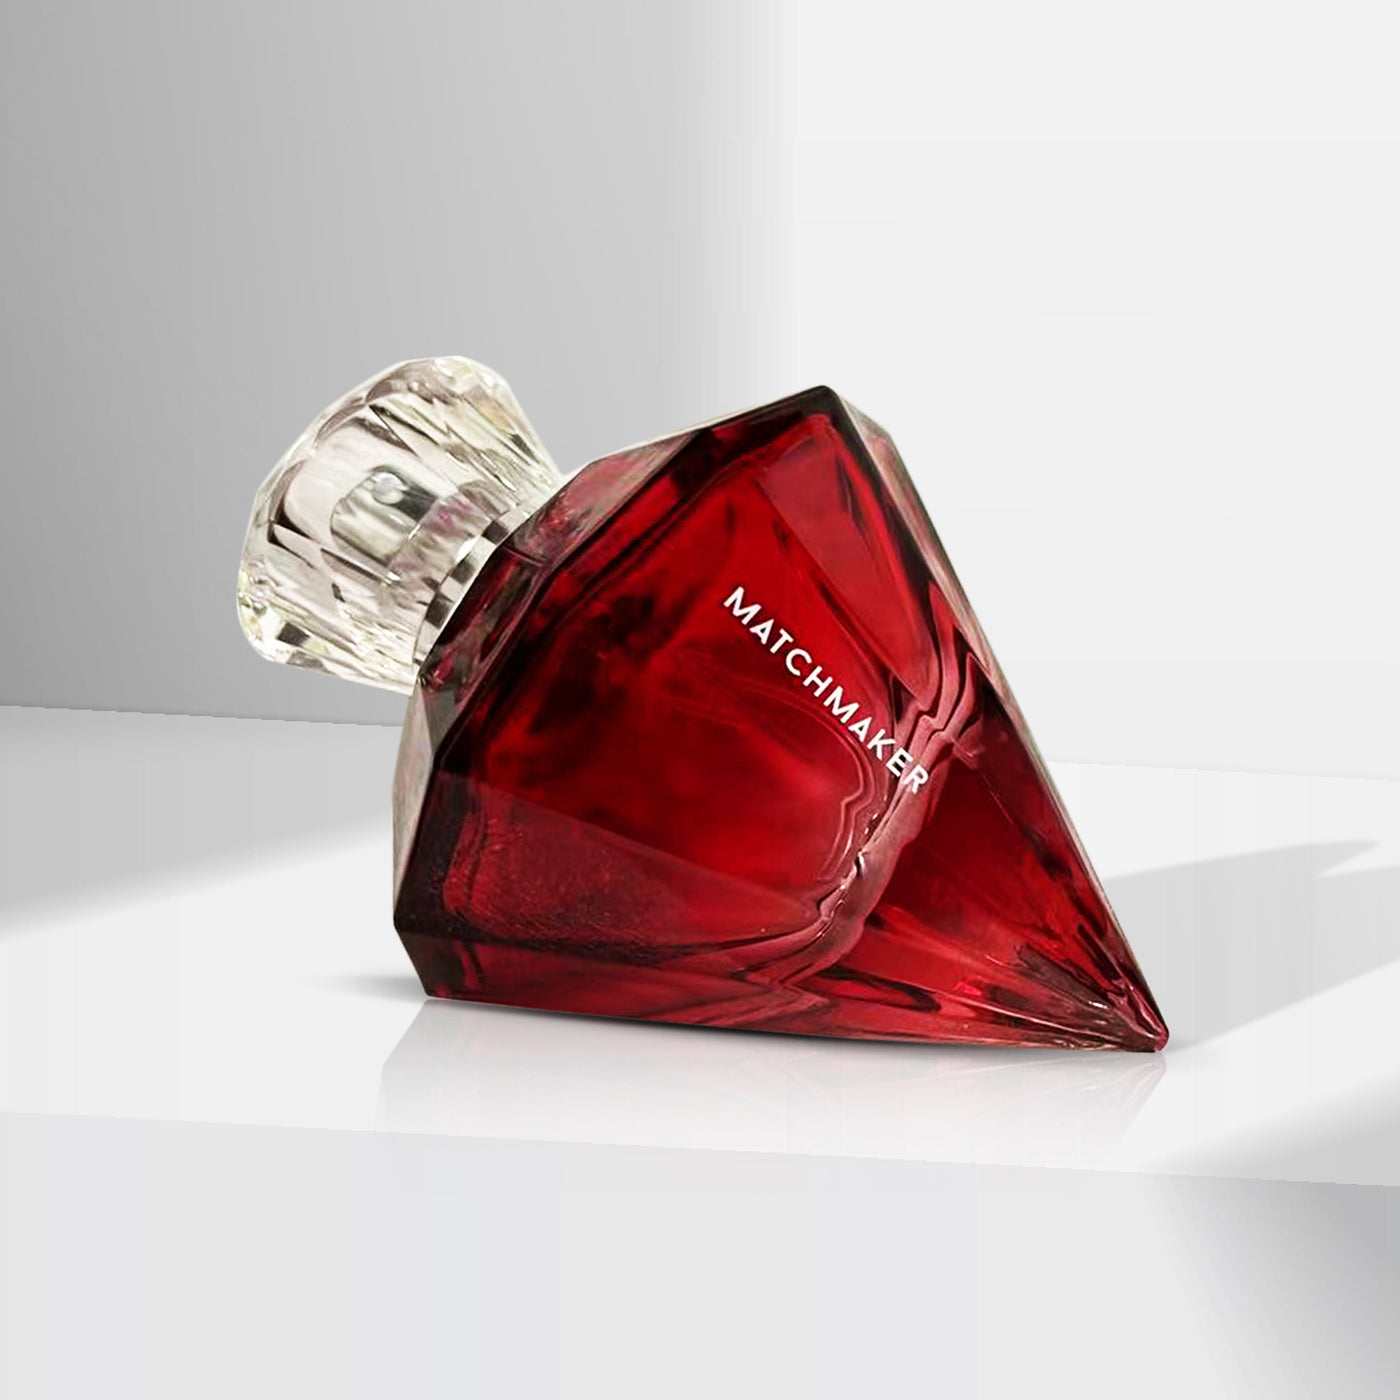 Matchmaker Red Diamond Pheromone Parfum Deluxe- Attract Him